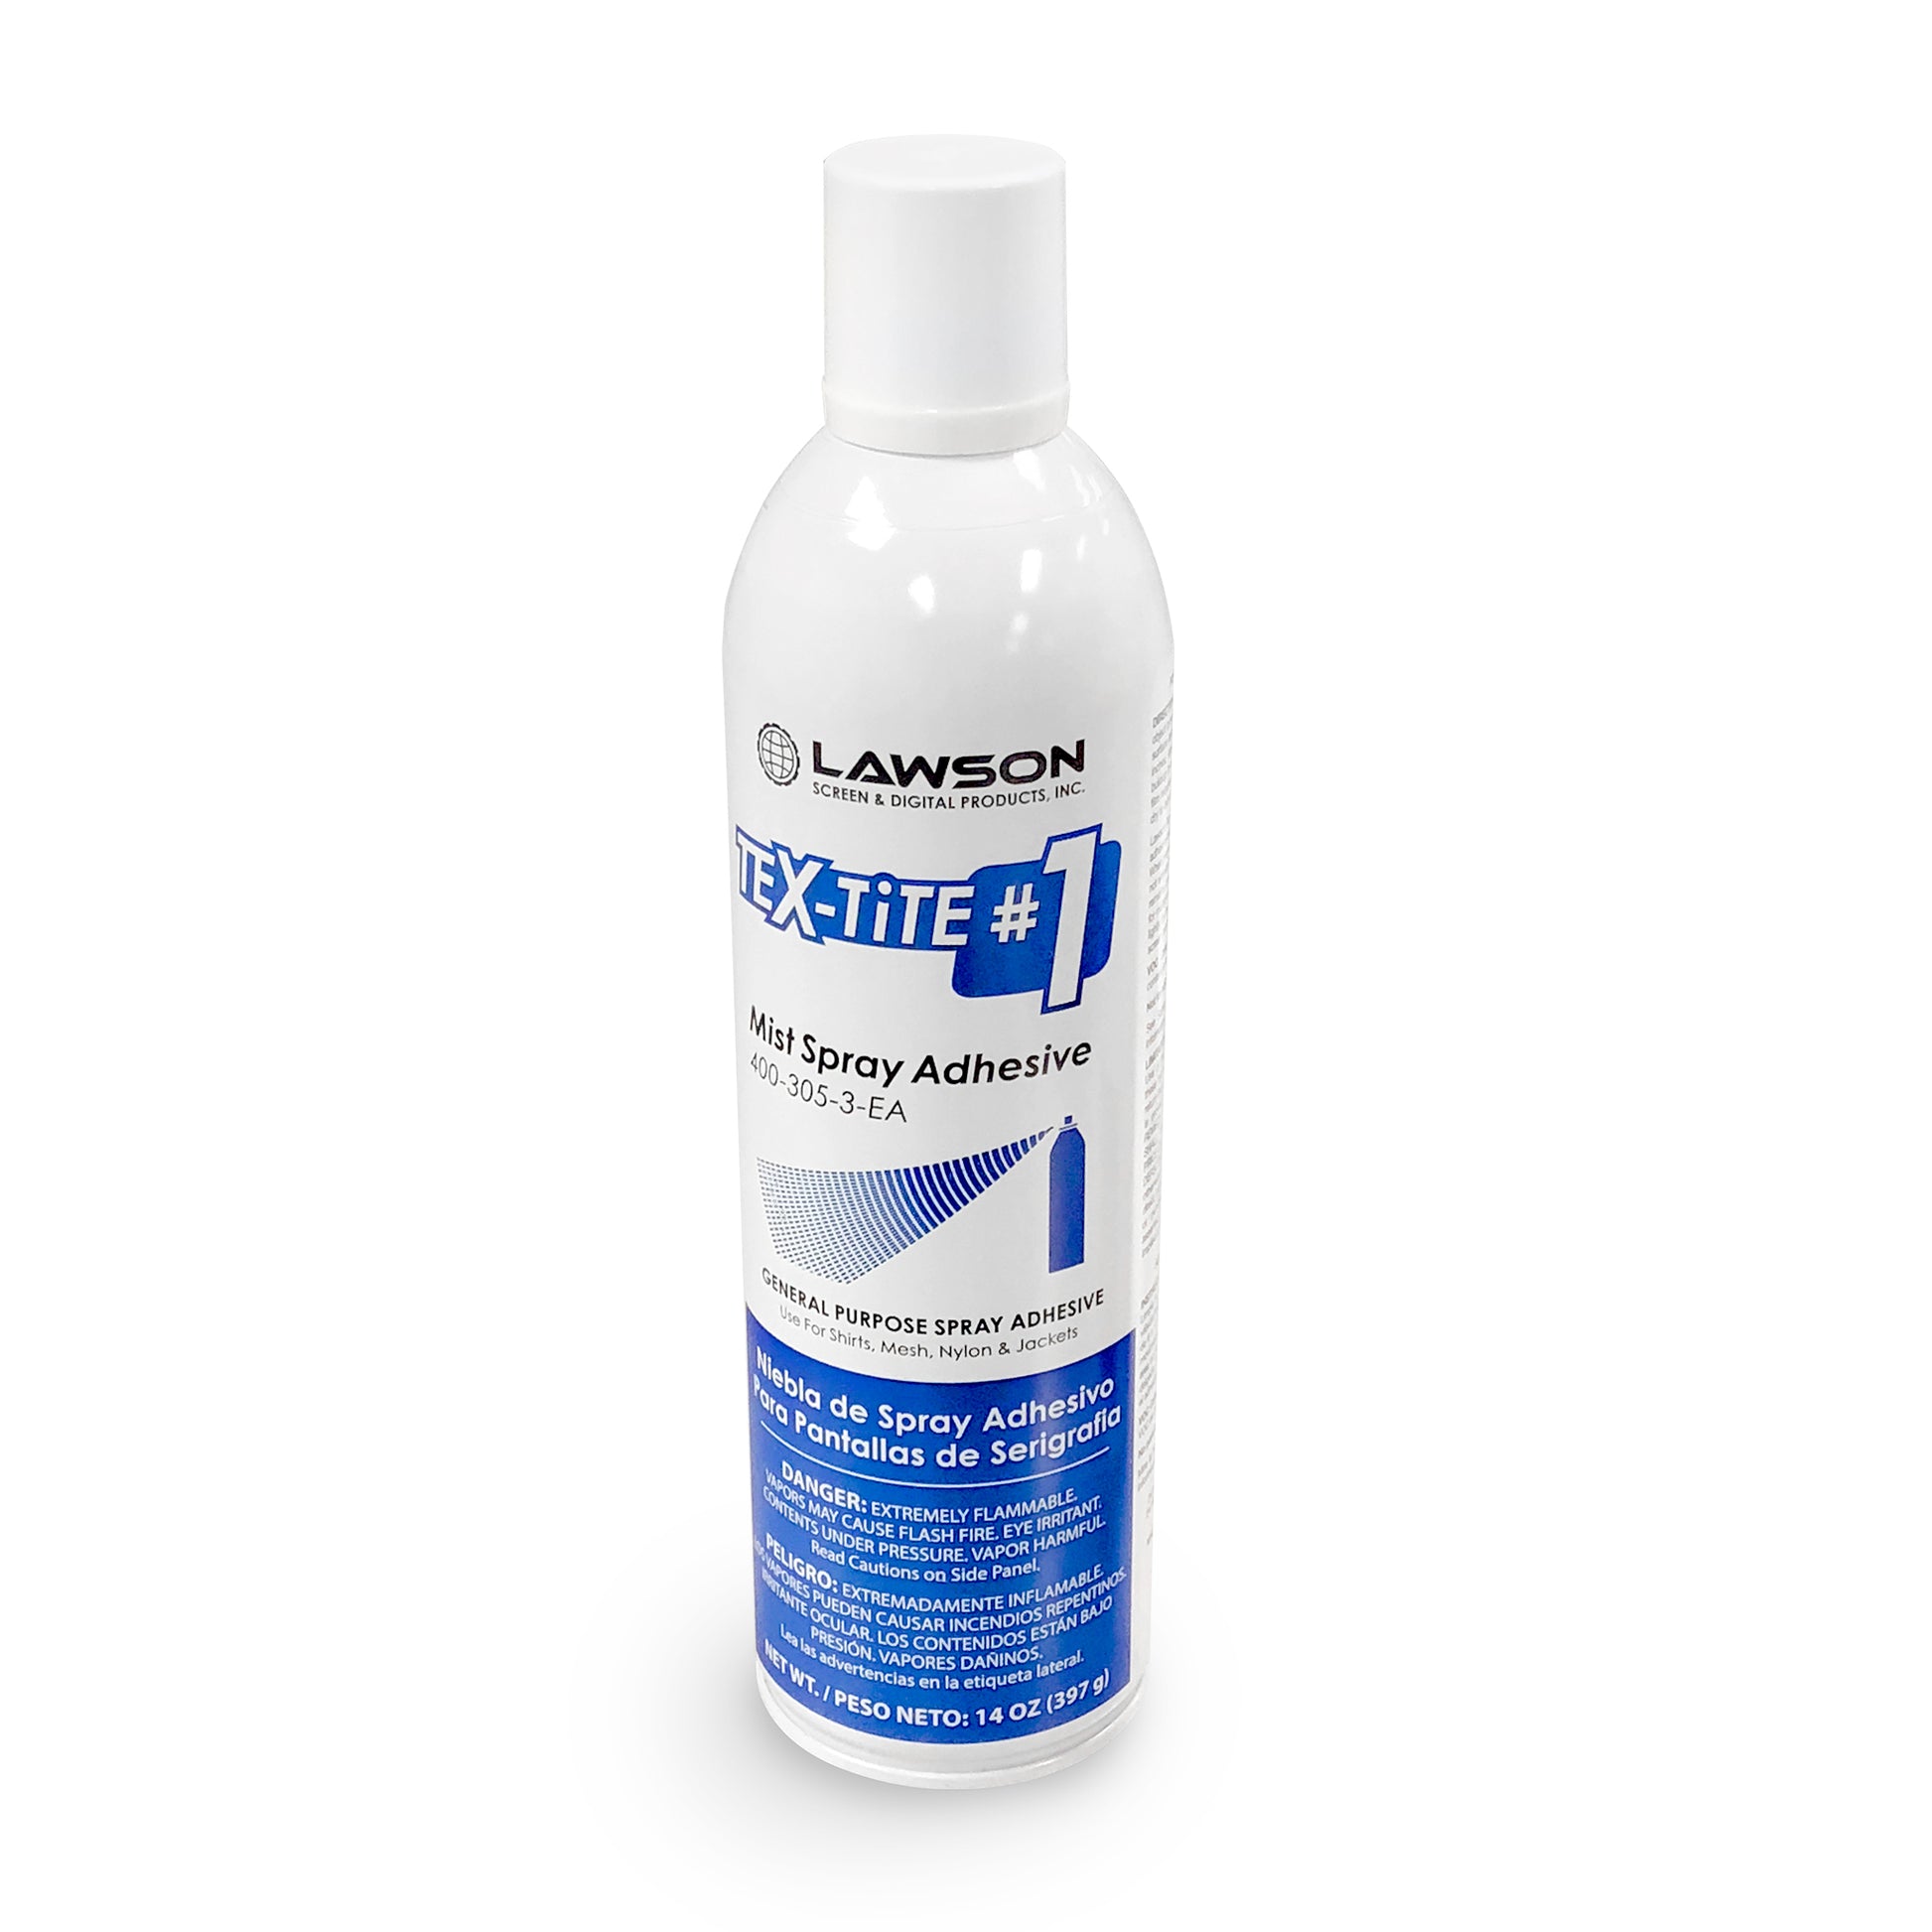 TexTite #1 Platen Spray Adhesive  Screen Printing Supplies – Lawson Screen  & Digital Products